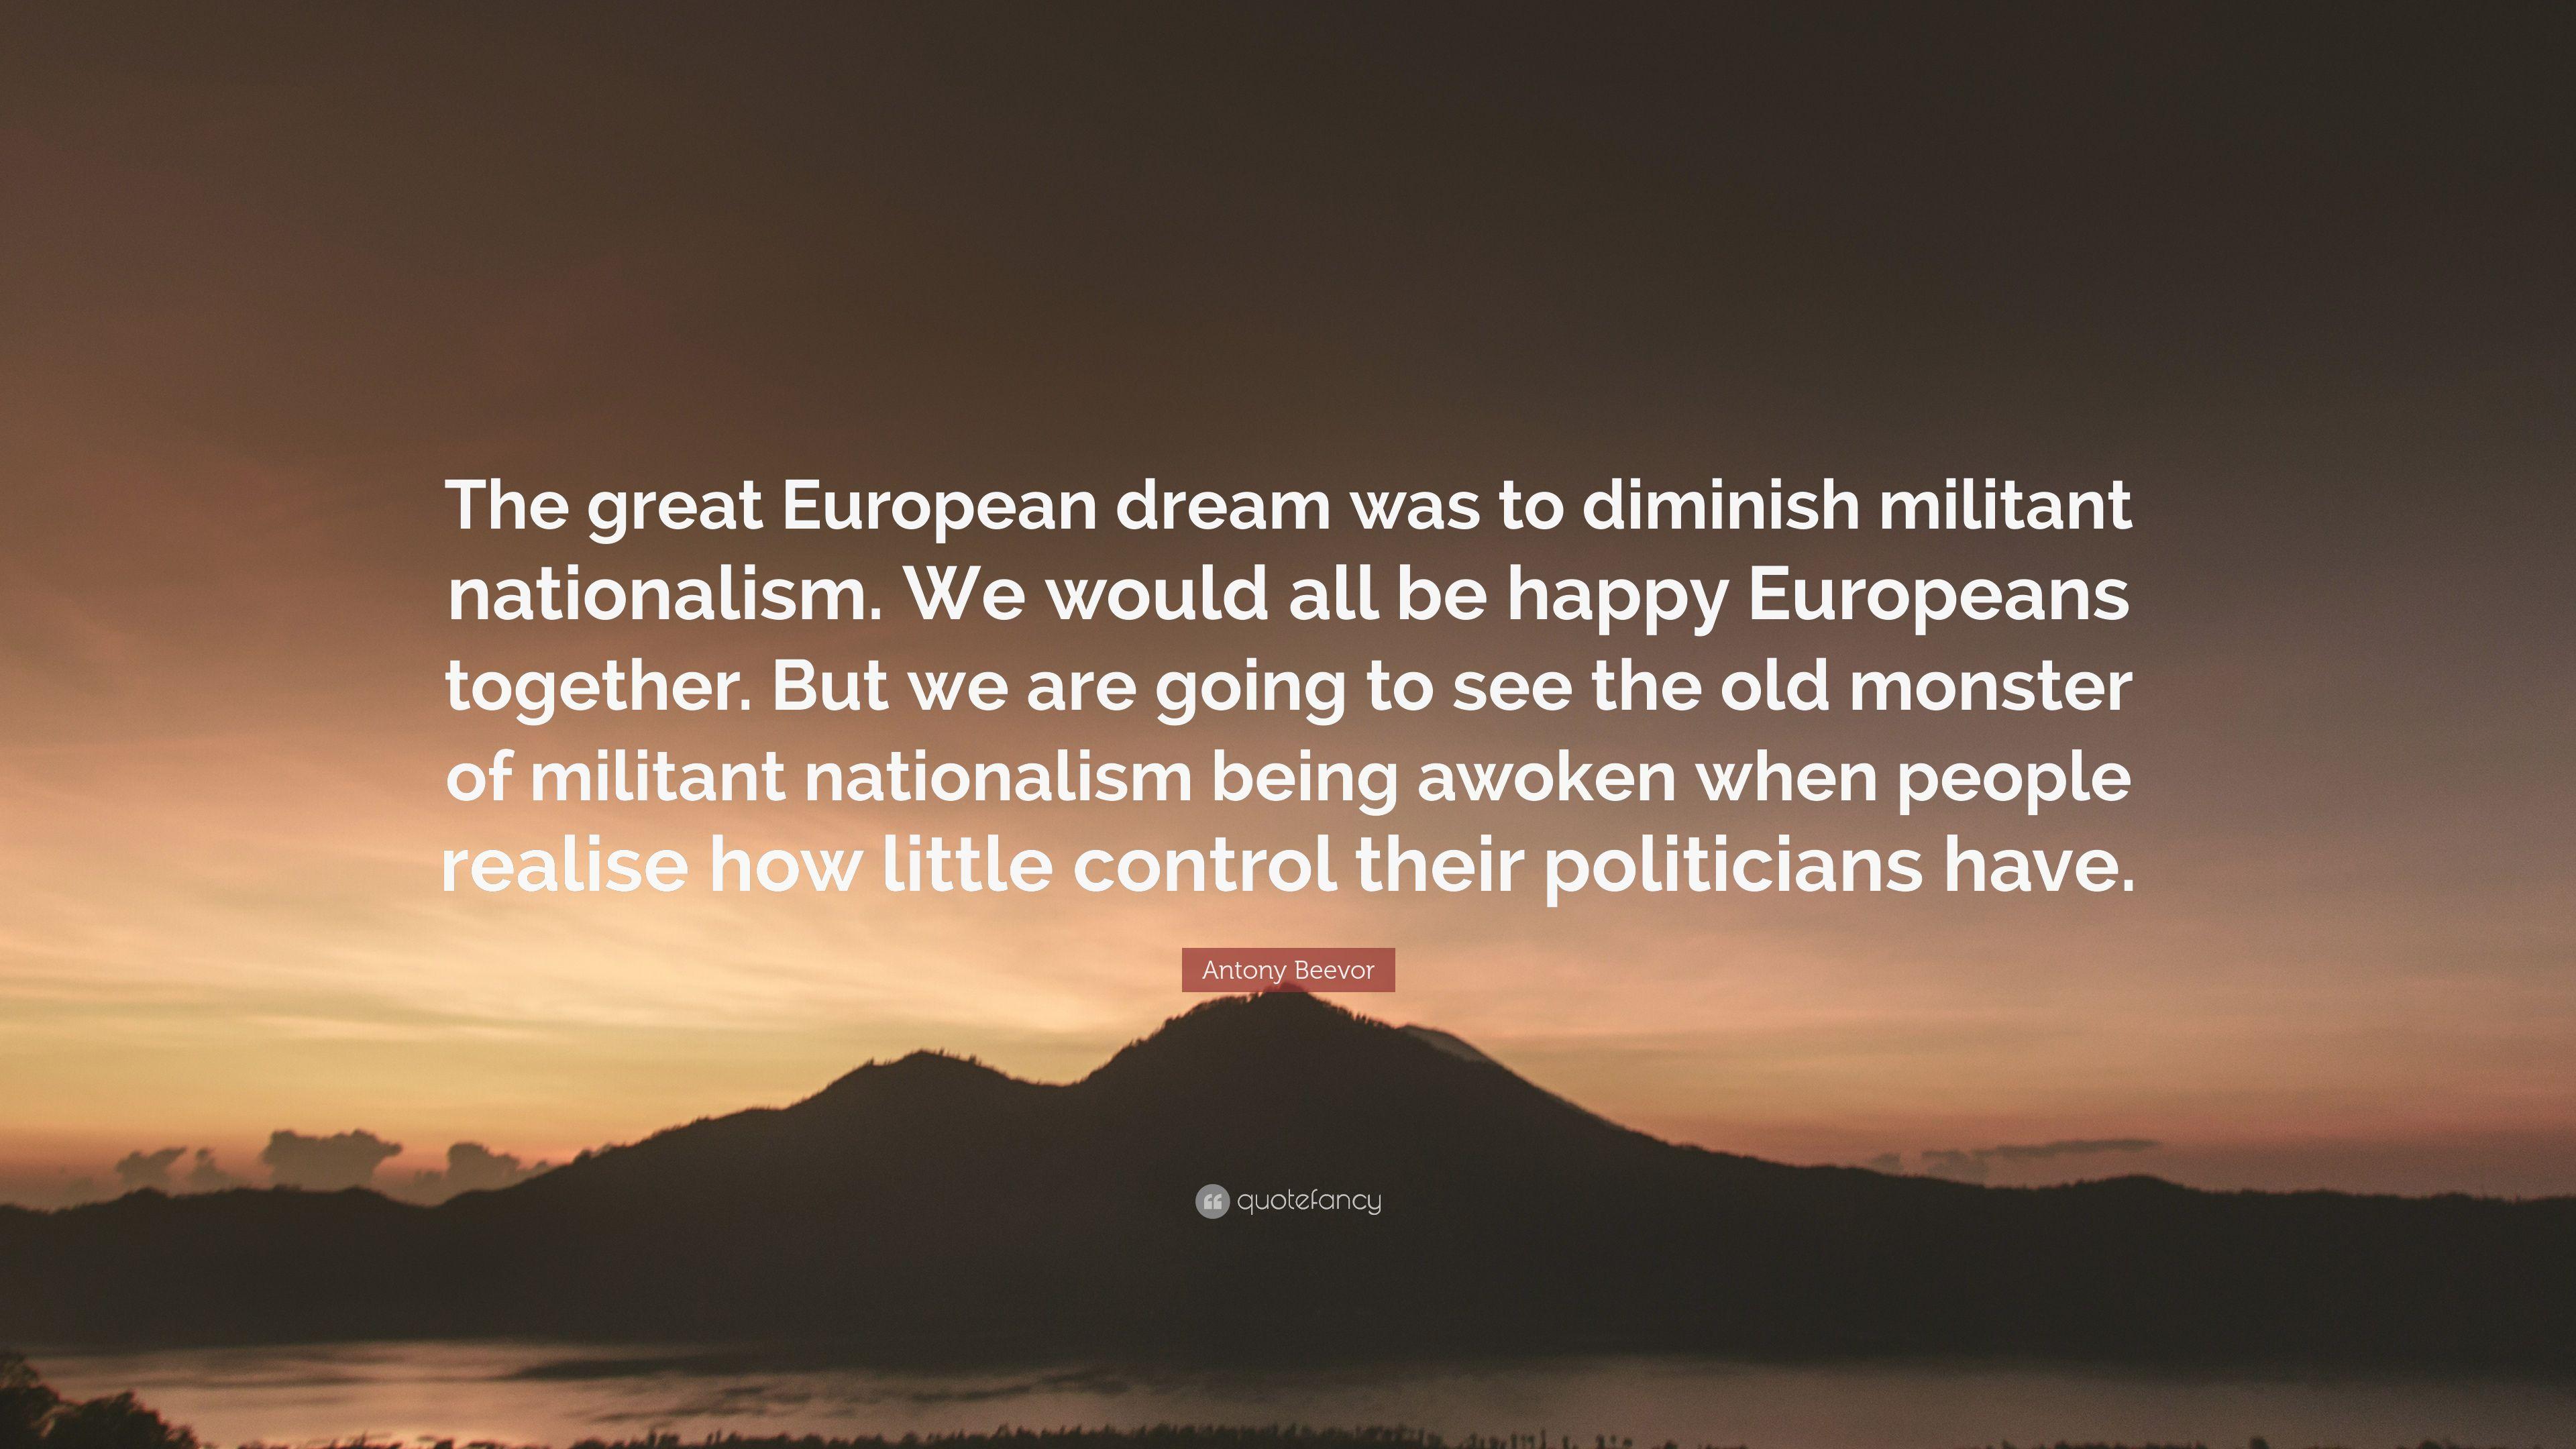 Antony Beevor Quote: “The great European dream was to diminish